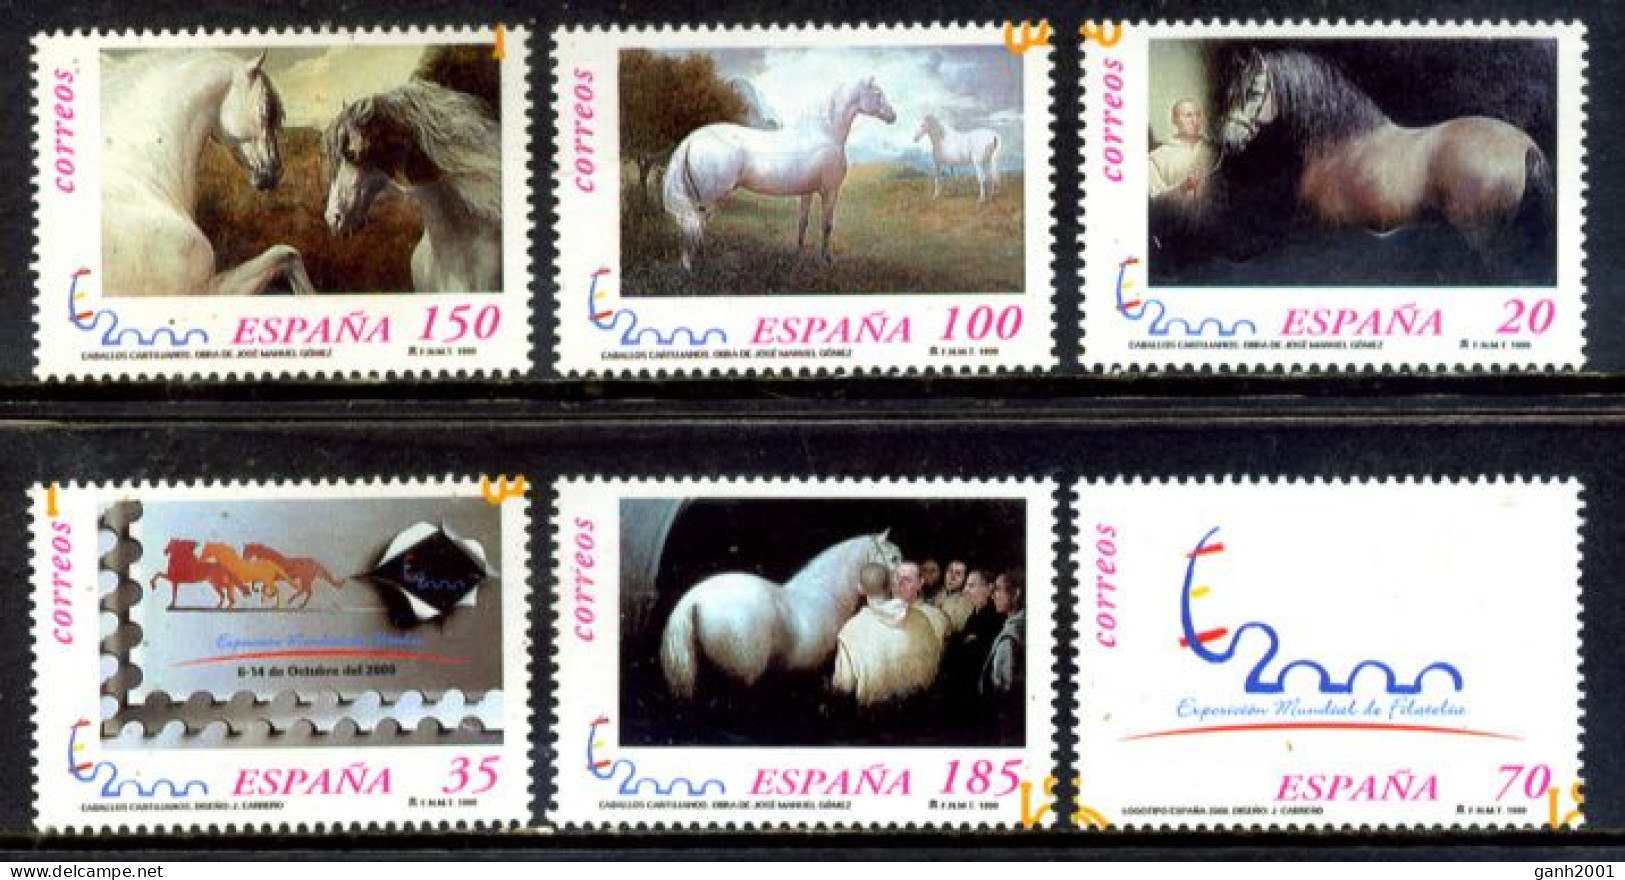 Spain 1999 España / Mammals Horses MNH Caballos Säugetiere Chevaux / Hb19  34-6 - Chevaux